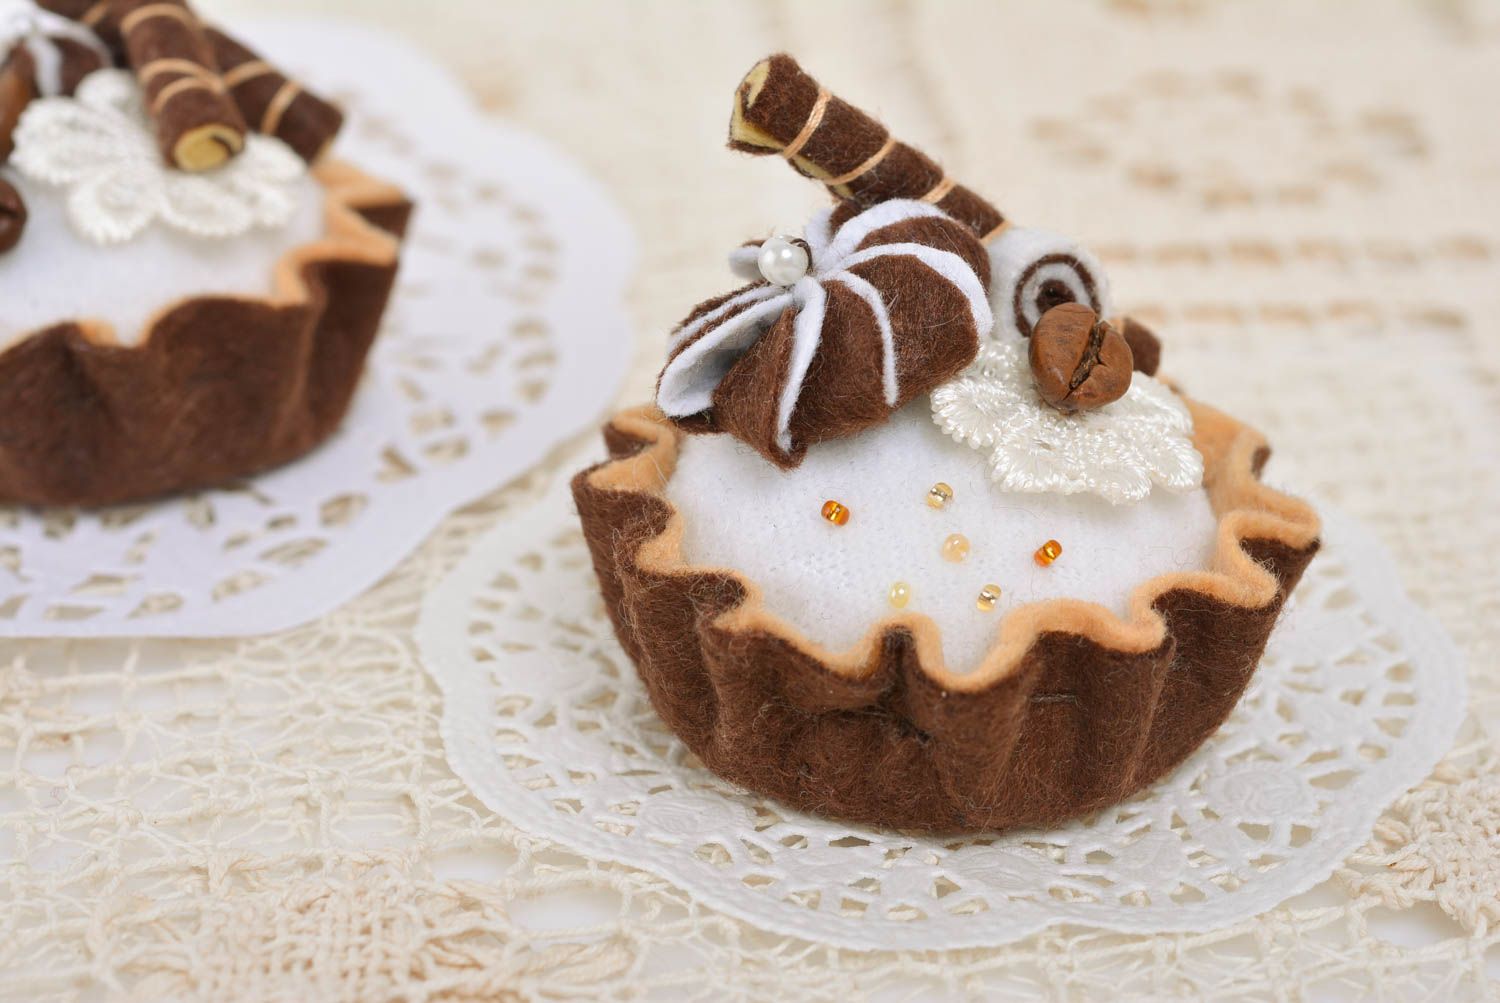 Handmade soft pincushion sewn of felt in the shape of chocolate cake with coffee photo 2